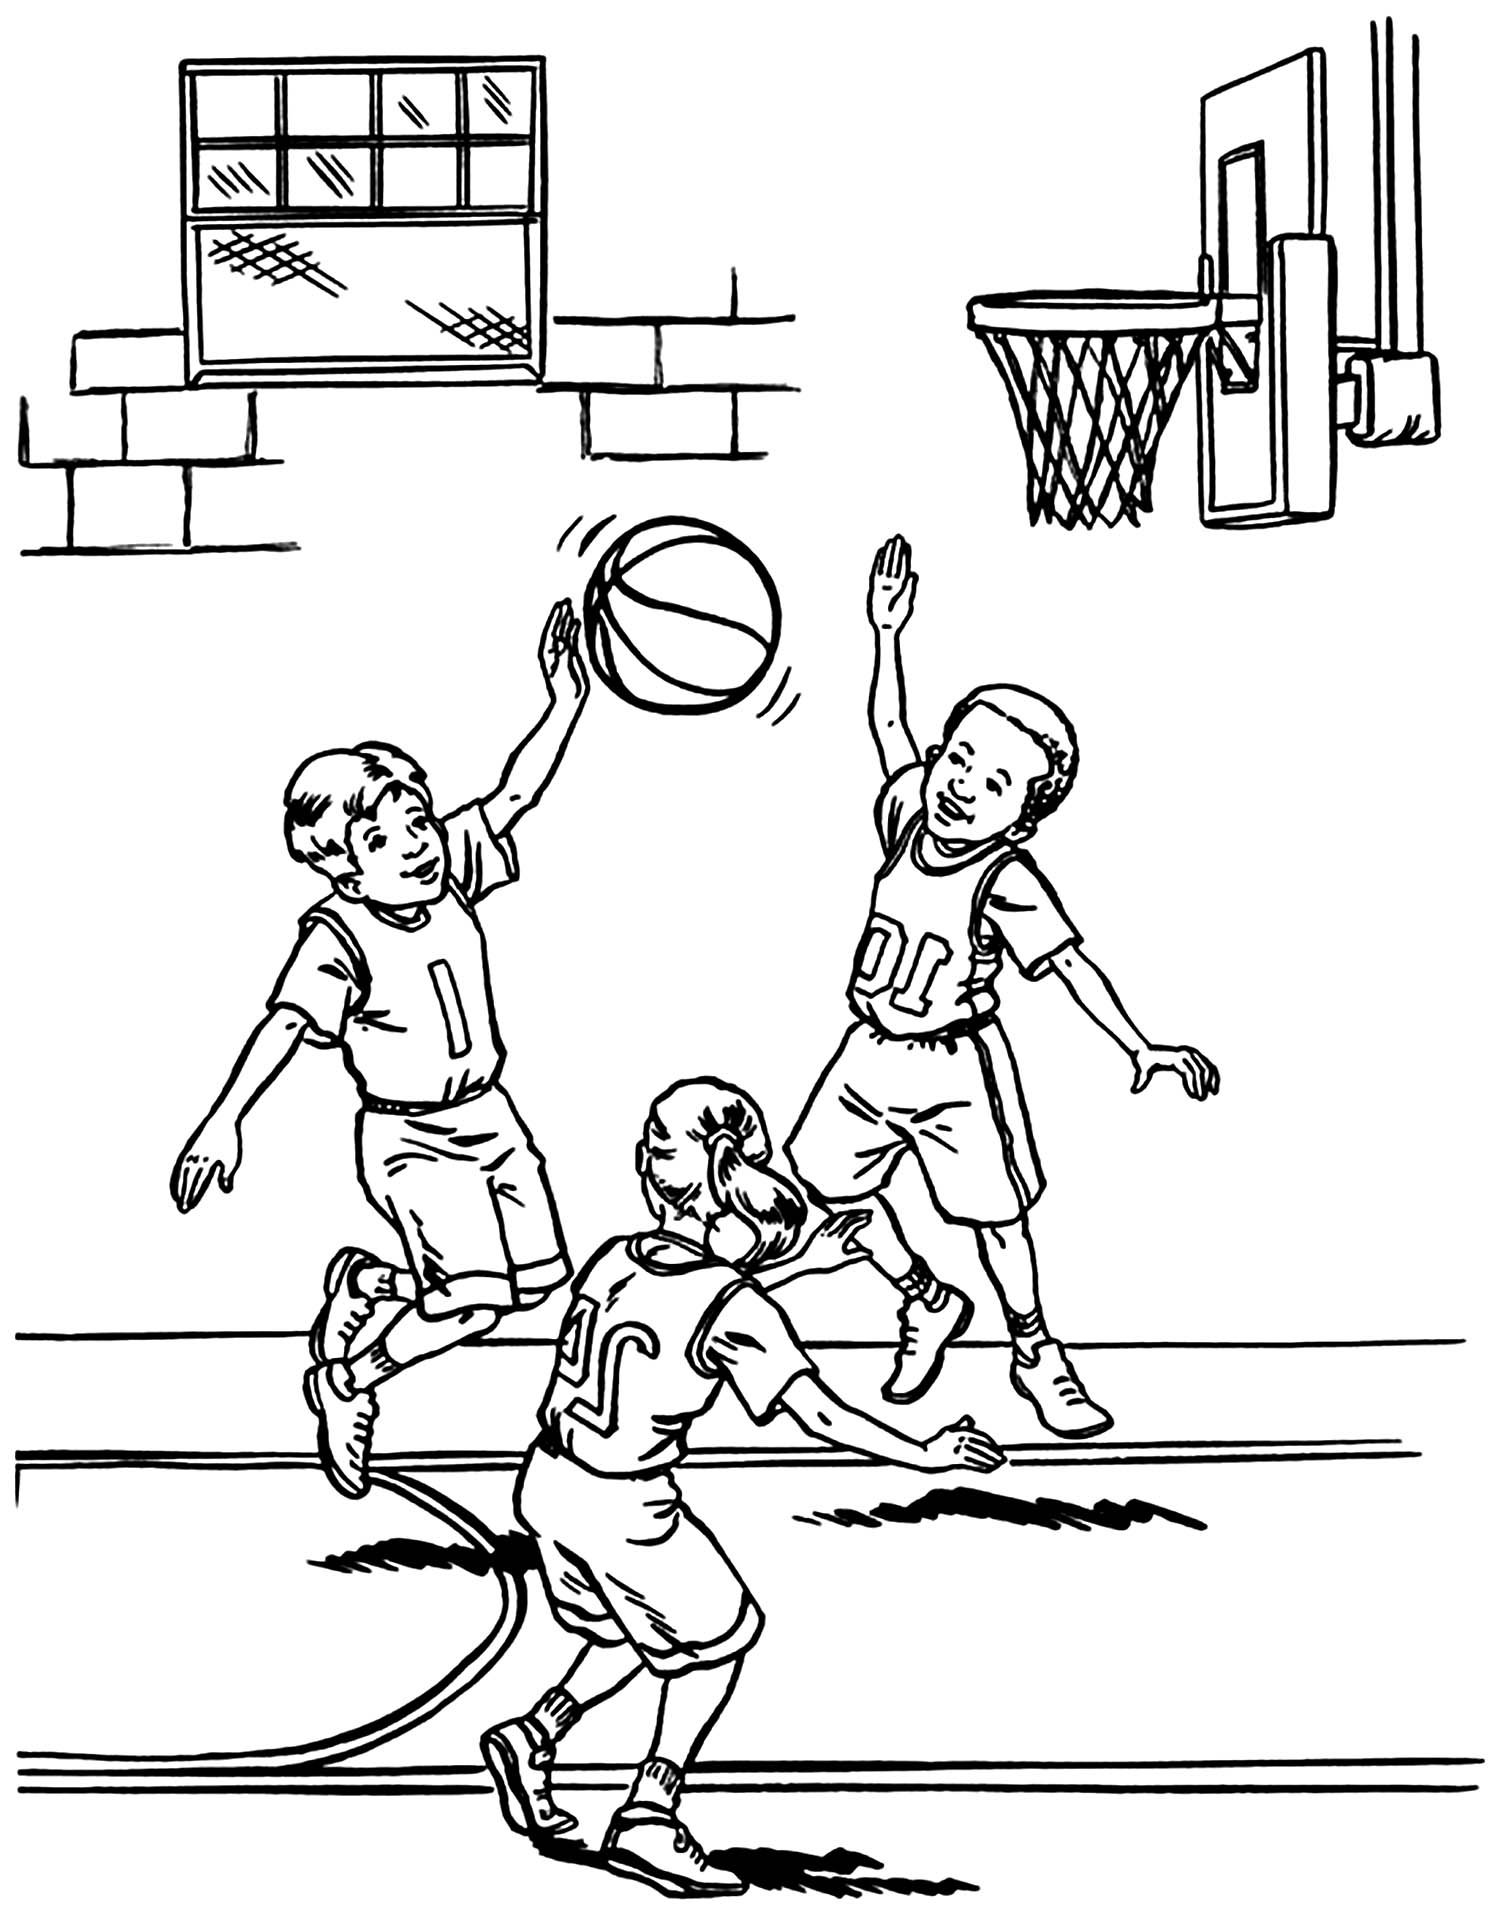 3 Kids Playing Basketball